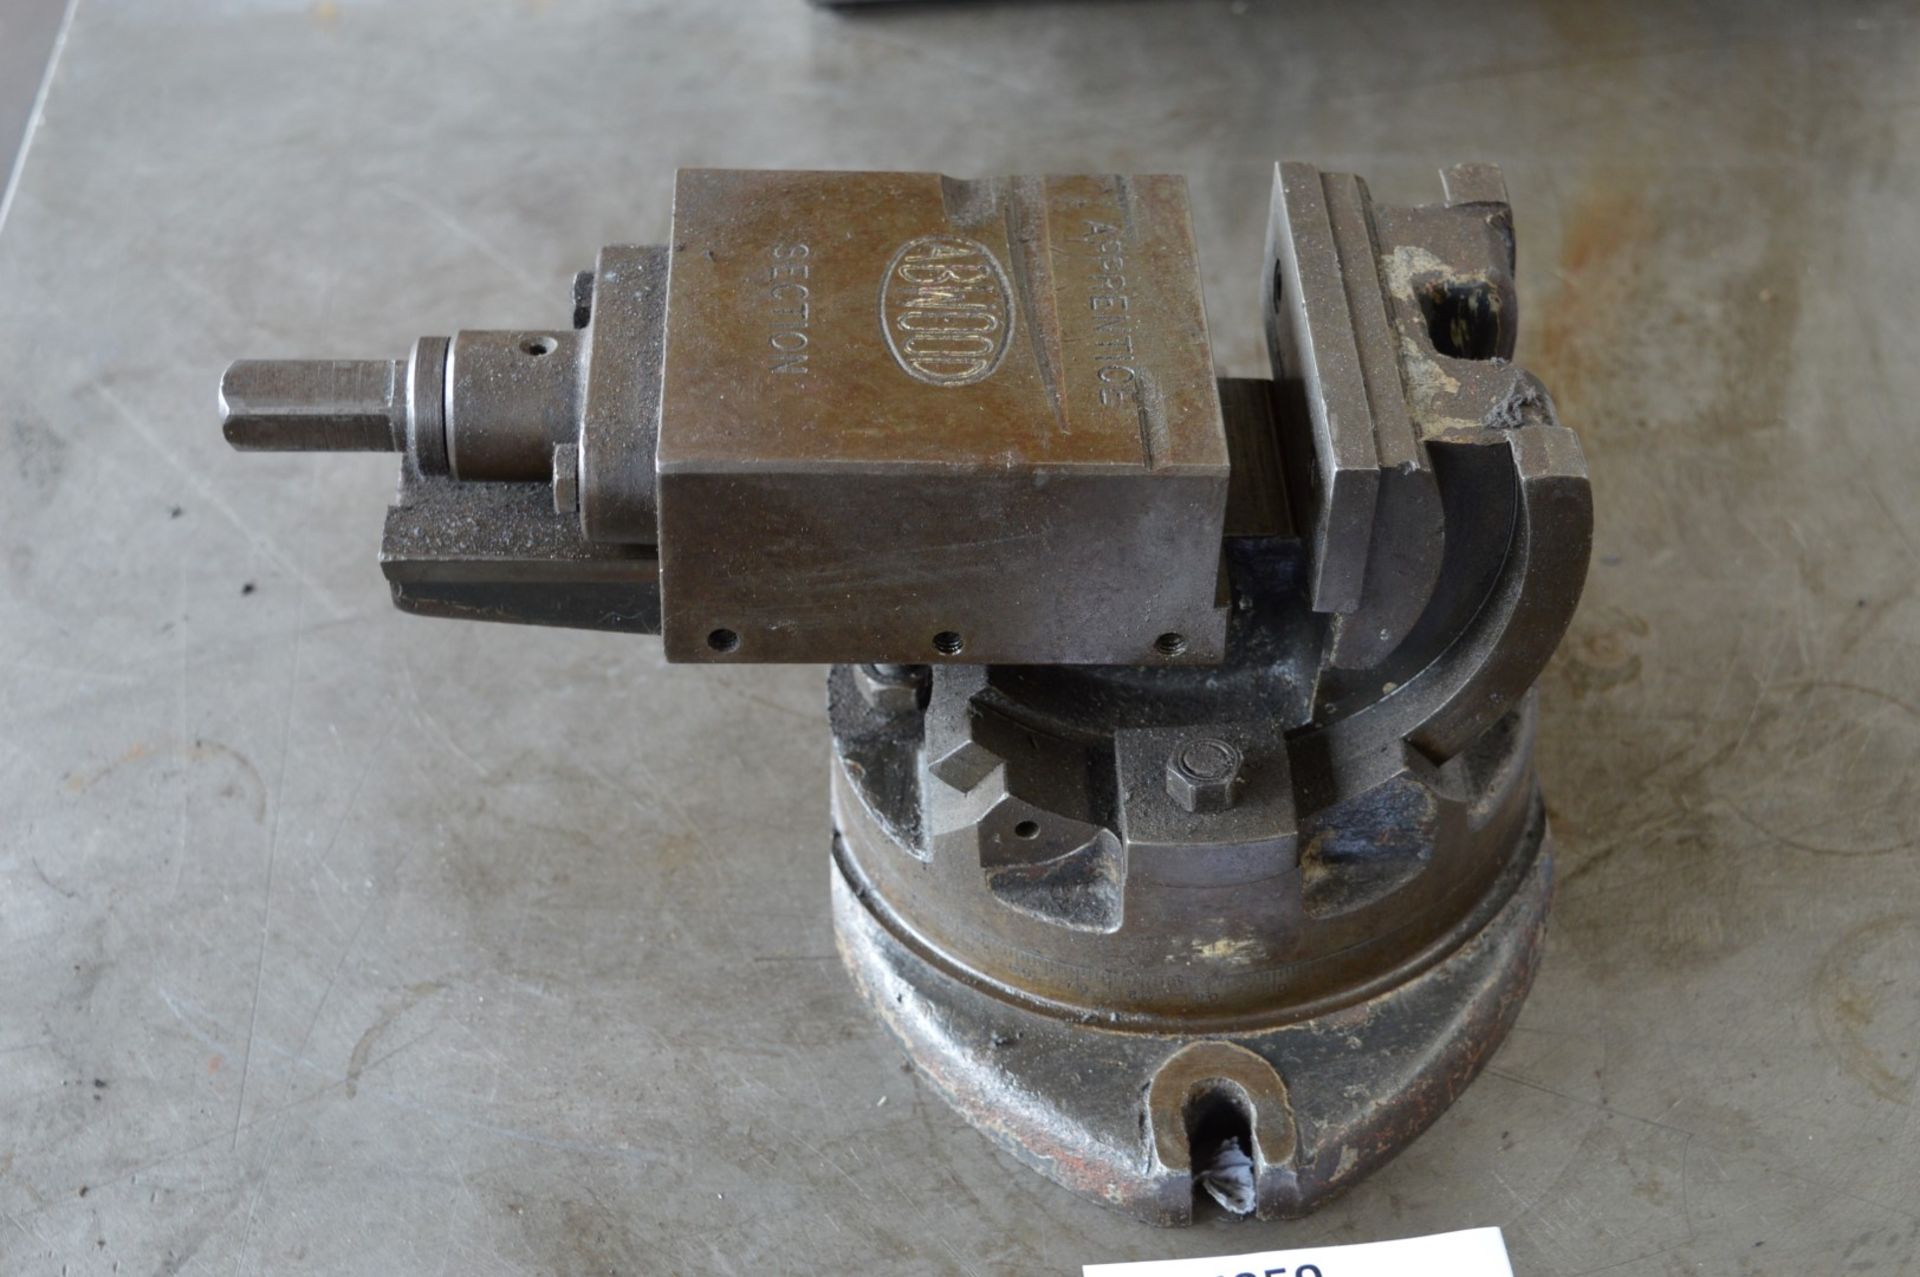 1 x Abwood Heavy Duty Tilting & Swiveling Machine Vice - CL202 - Ref EN059 - Location: Worcester - Image 2 of 6